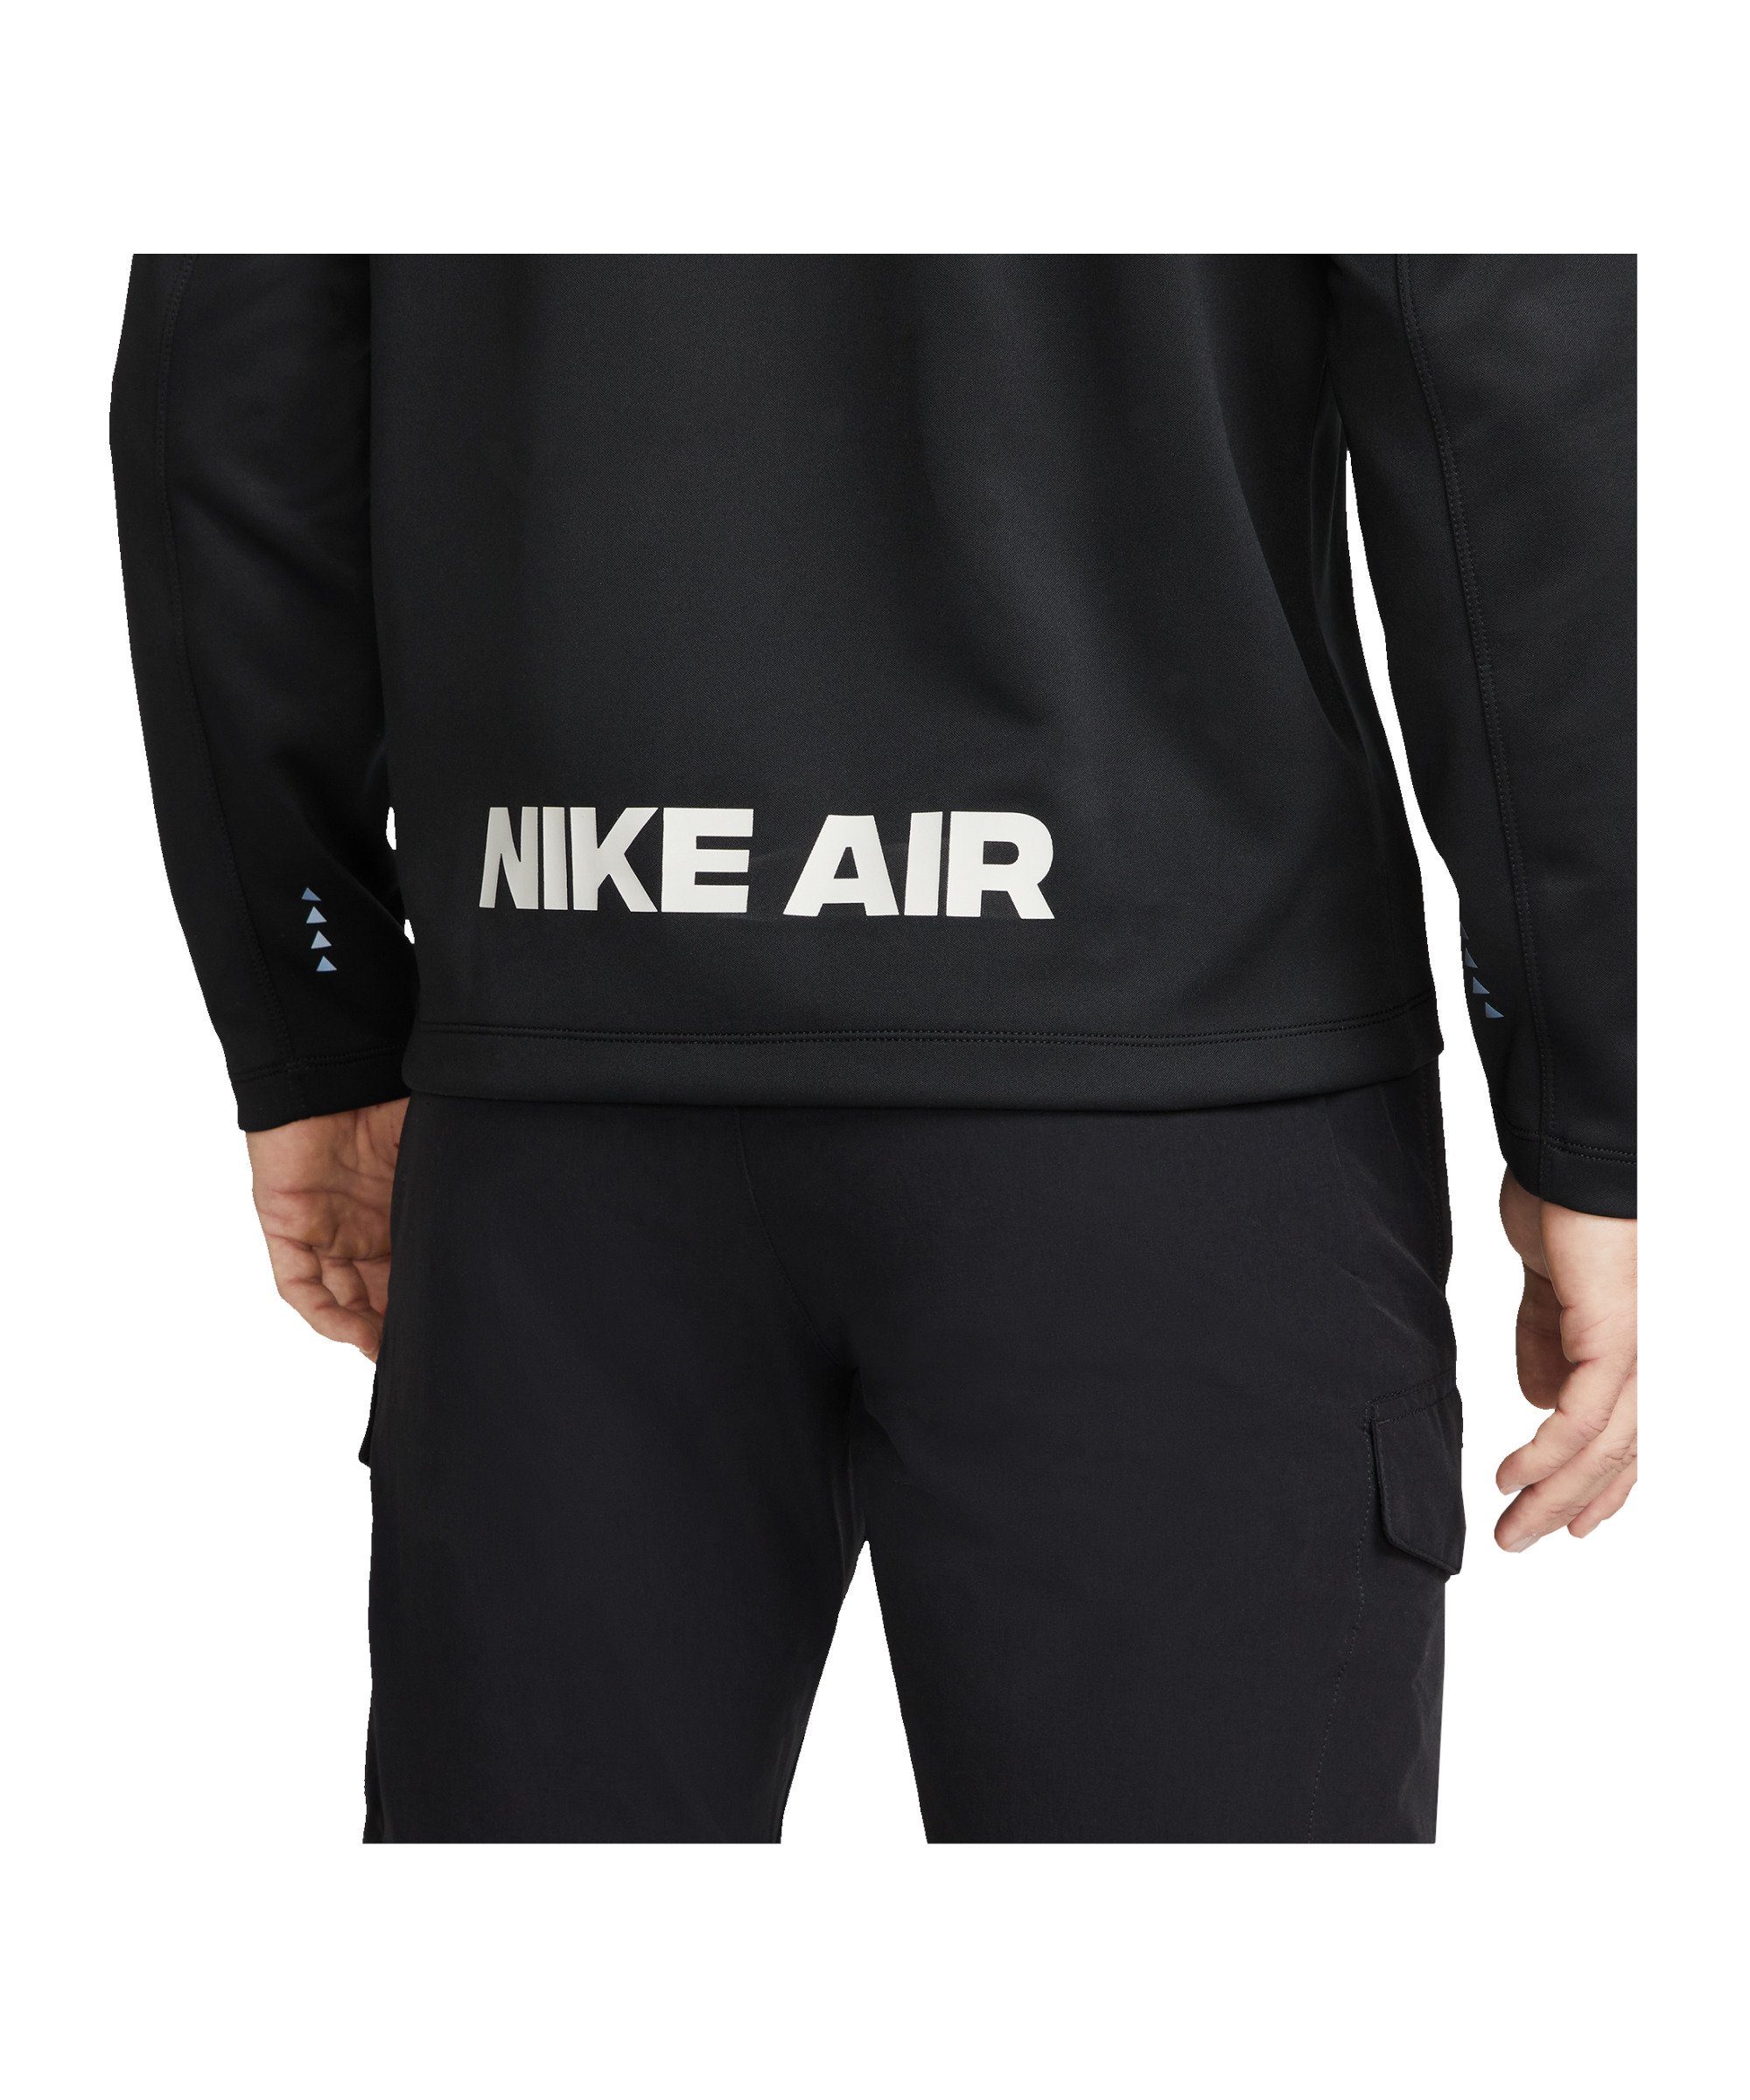 Nike Sportswear Sweatshirt Air Polyknit Crew Sweatshirt